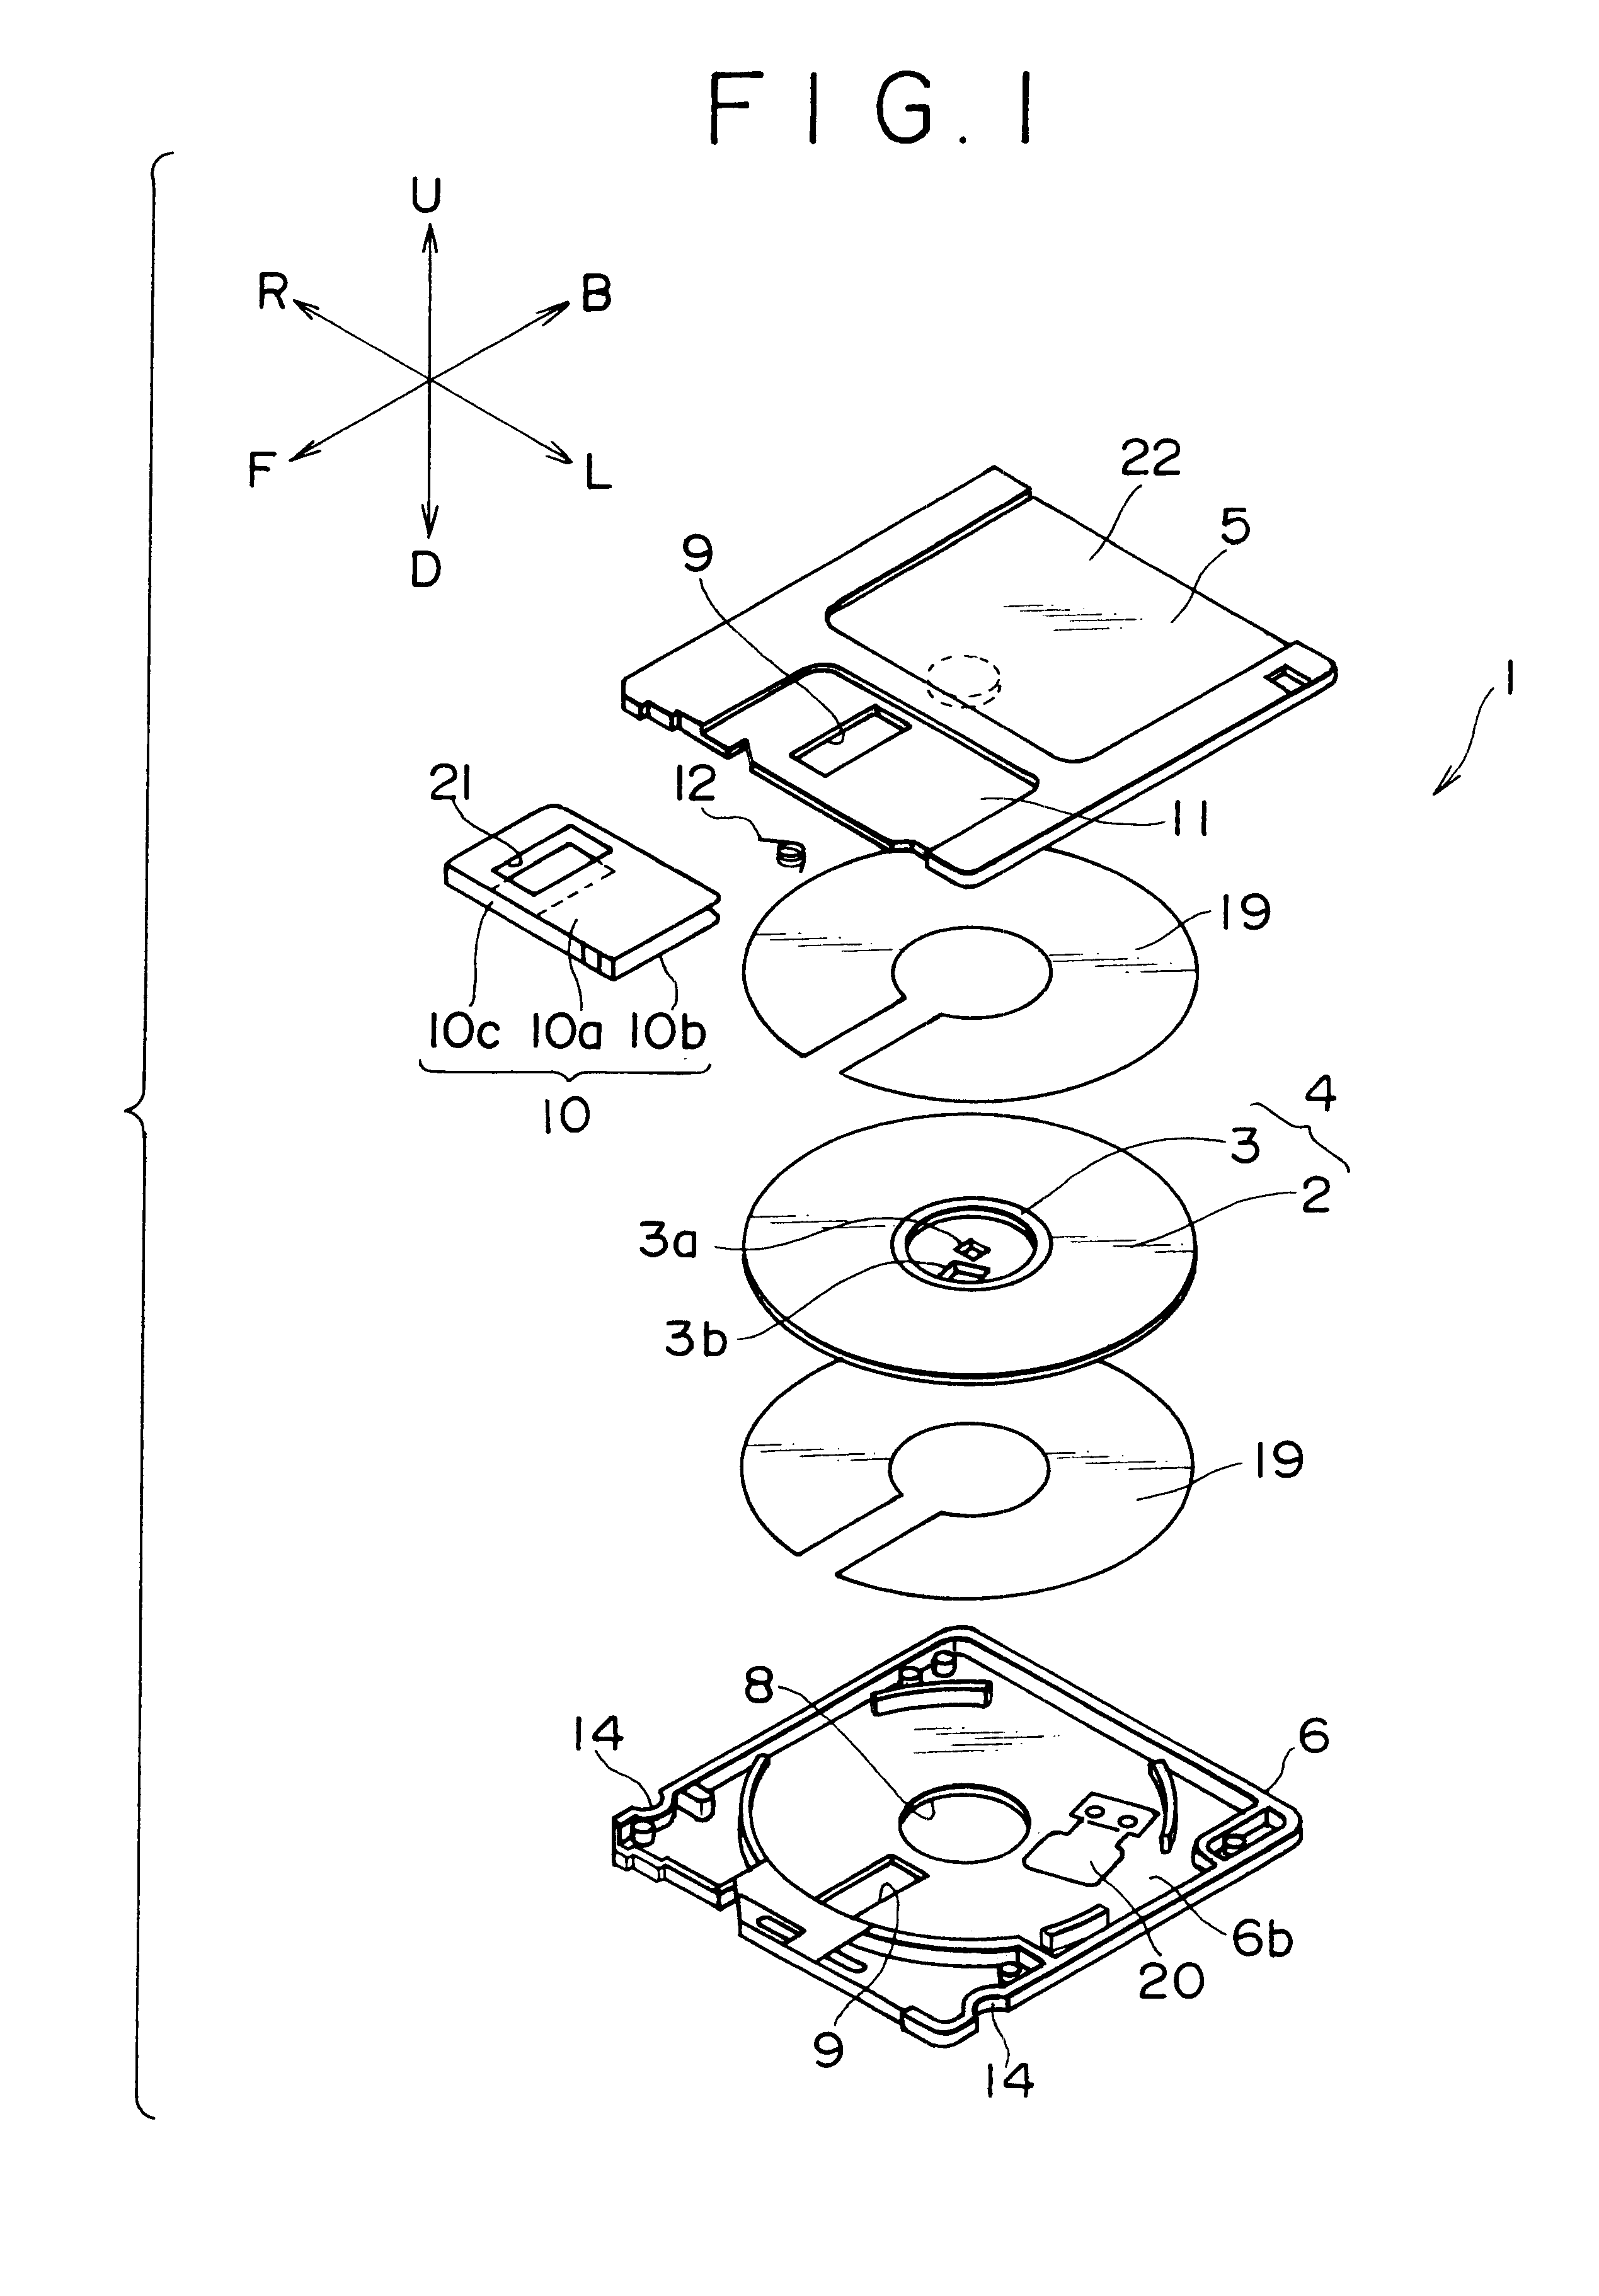 Disk drive apparatus